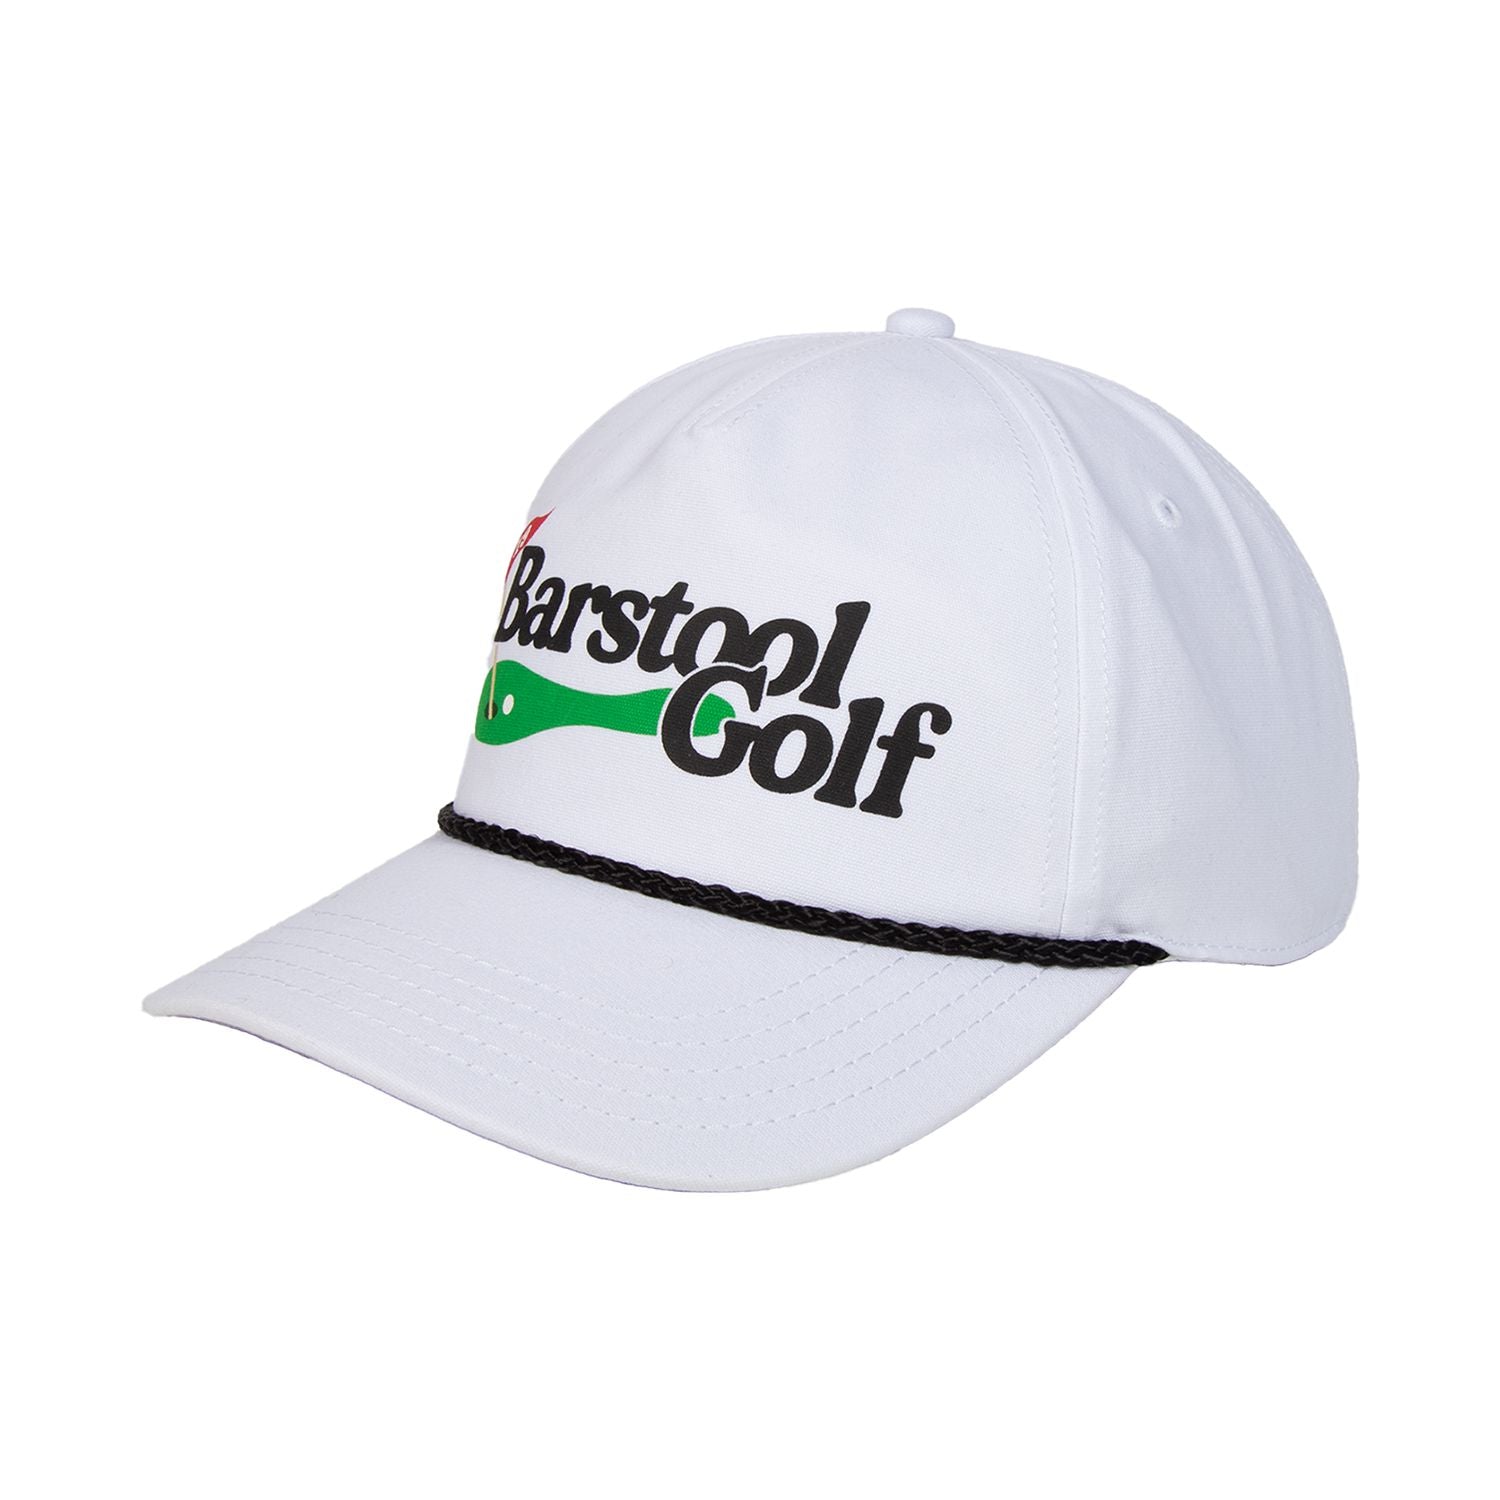 Barstool Golf Canvas Rope Hat